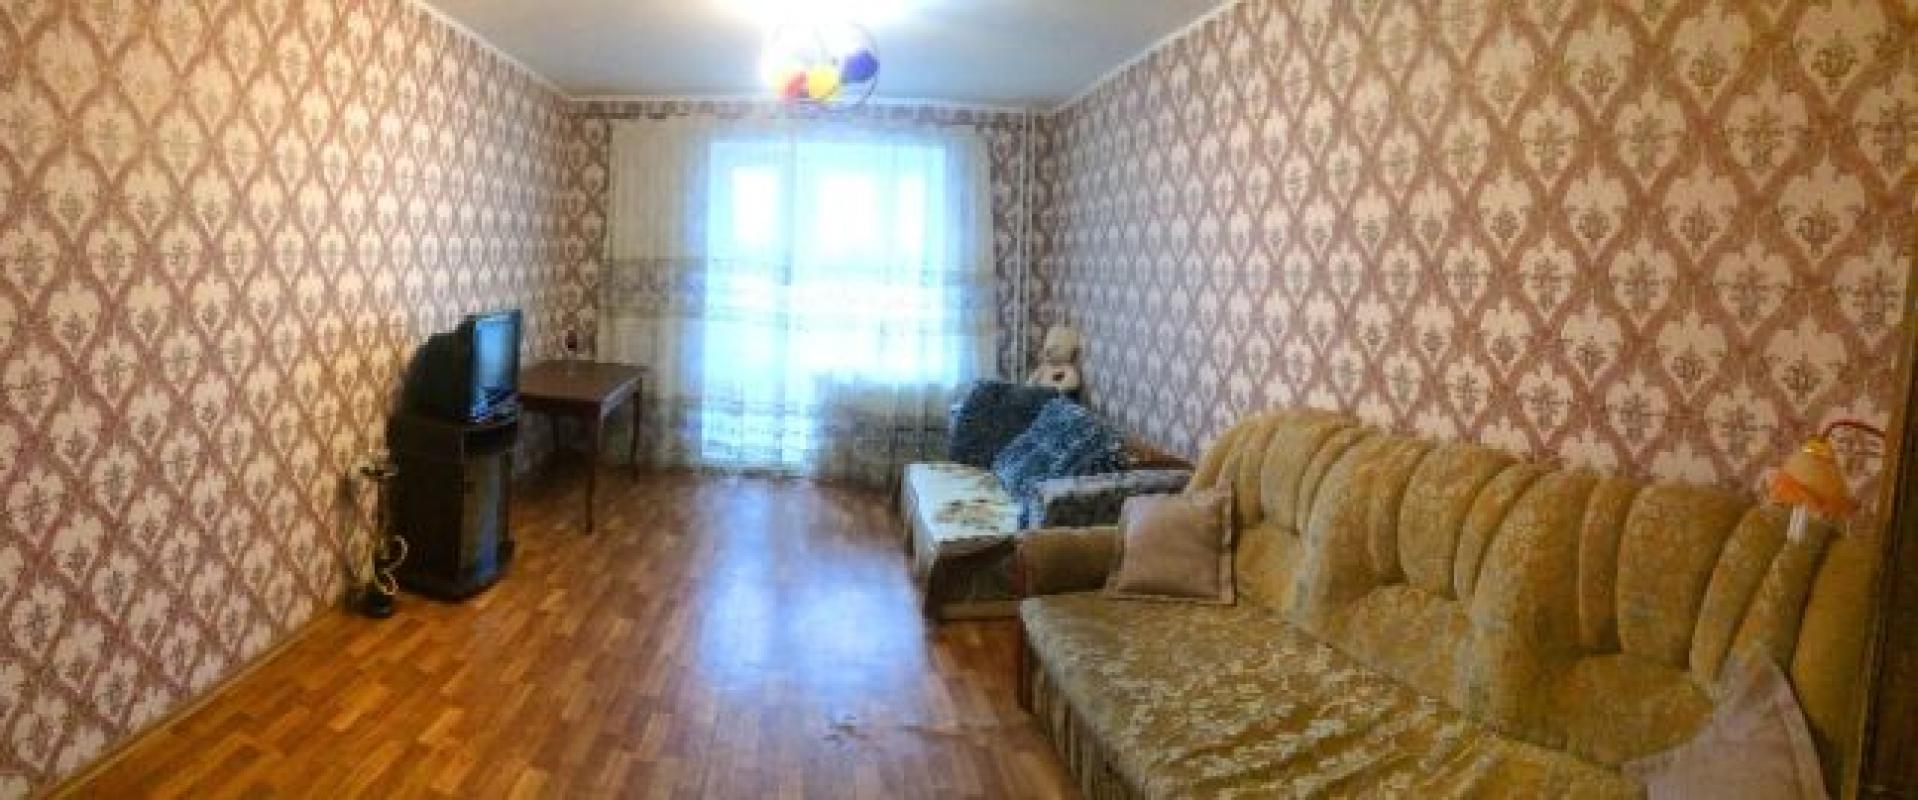 Долгосрочная аренда 3 комнатной квартиры Плиточная ул.